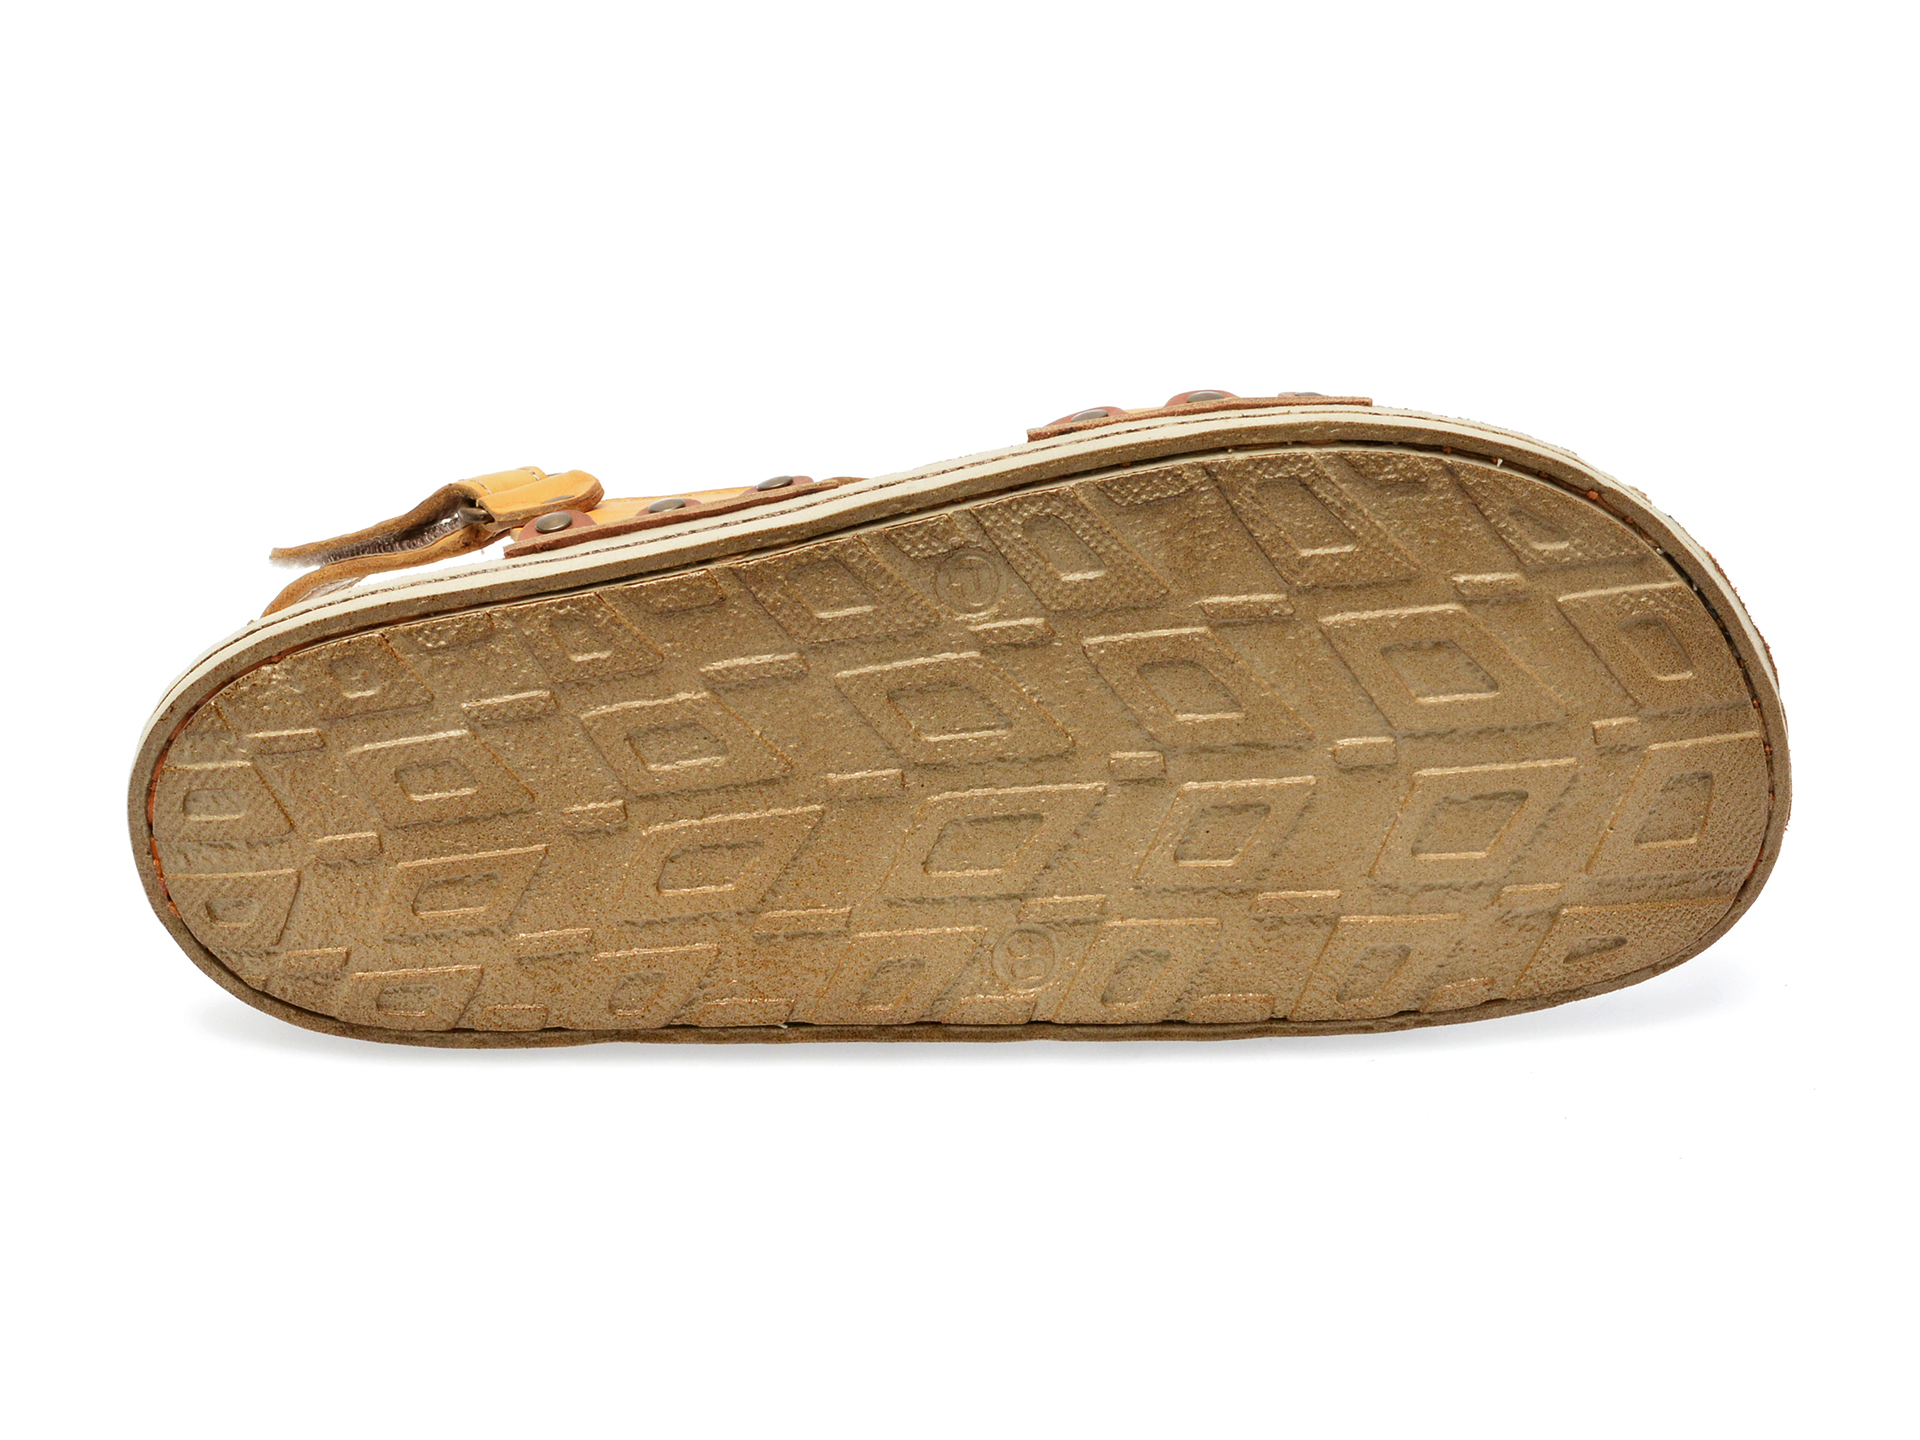 Sandale FLAVIA PASSINI galbene, 1275, din piele naturala